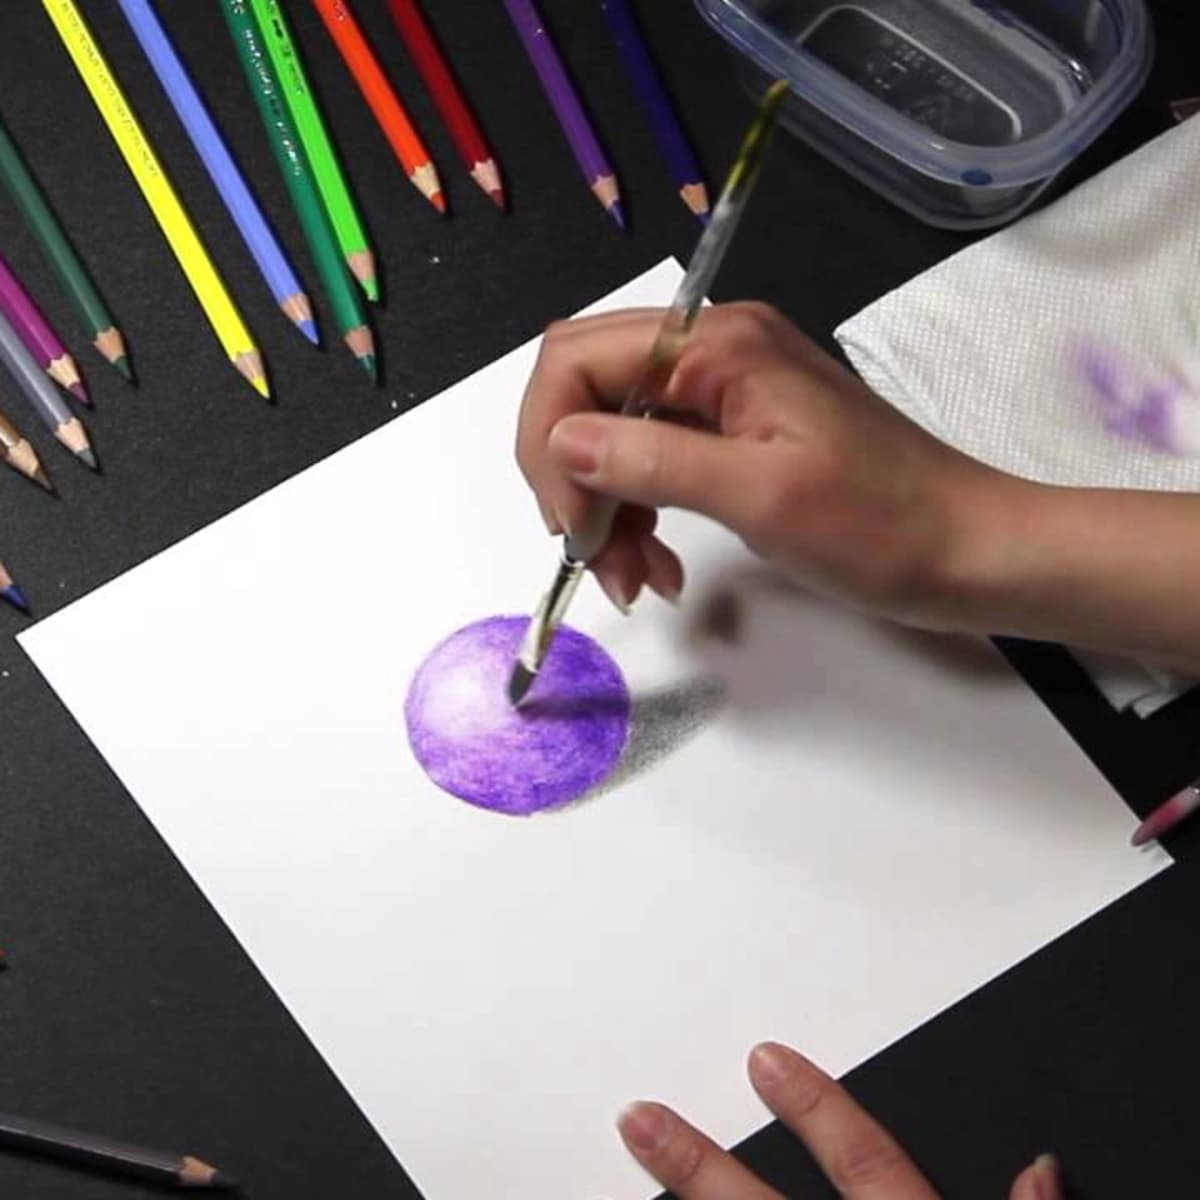 How to Use Watercolor Pencils - Watercolor Pencil Techniques